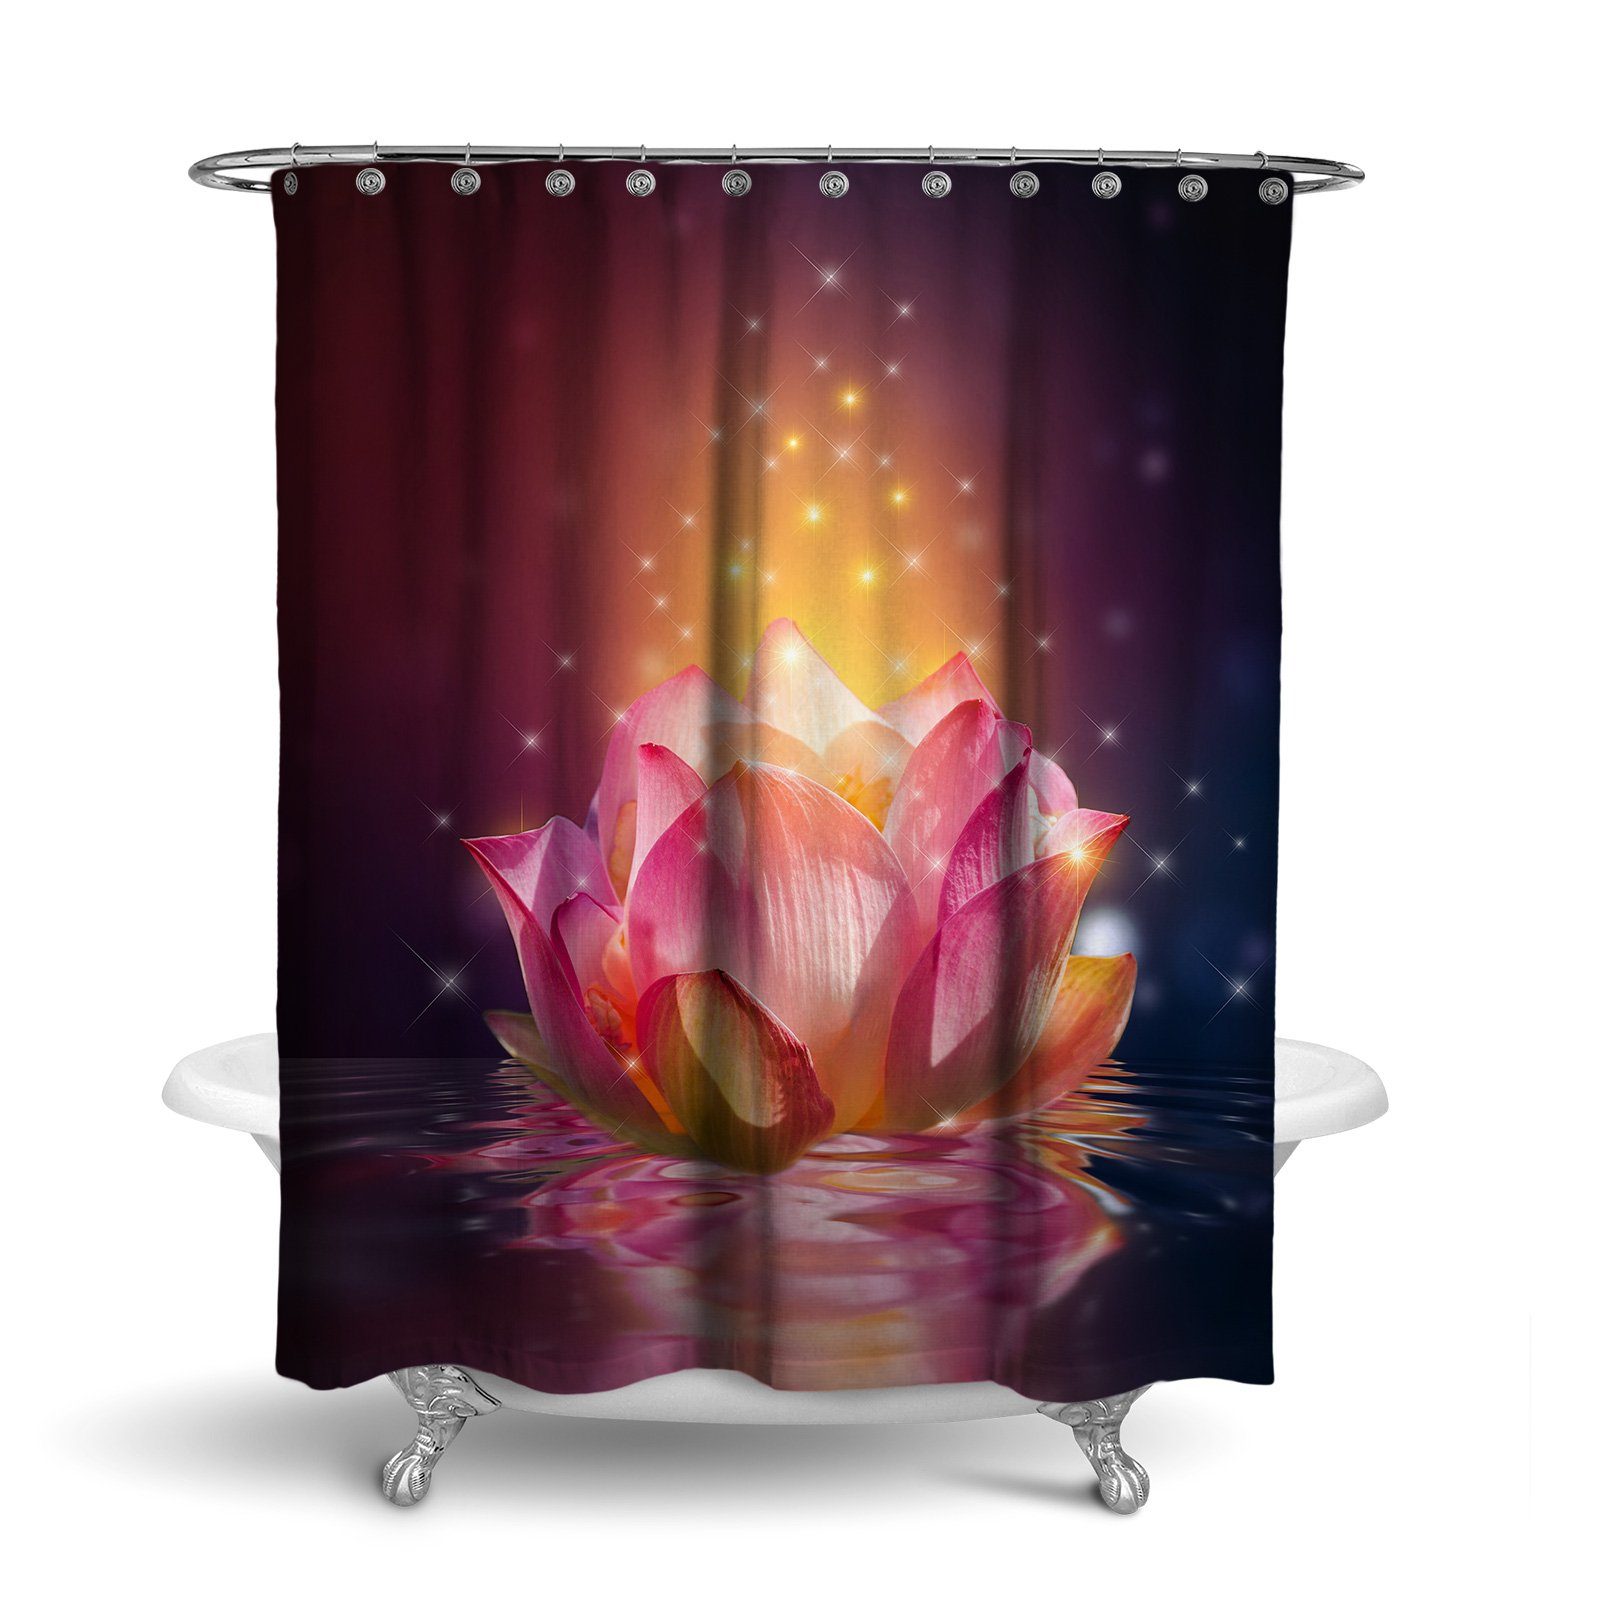 RAHMENLOS® Duschvorhang Motiv Lotus - 180 cm x 200 cm Breite 180 cm